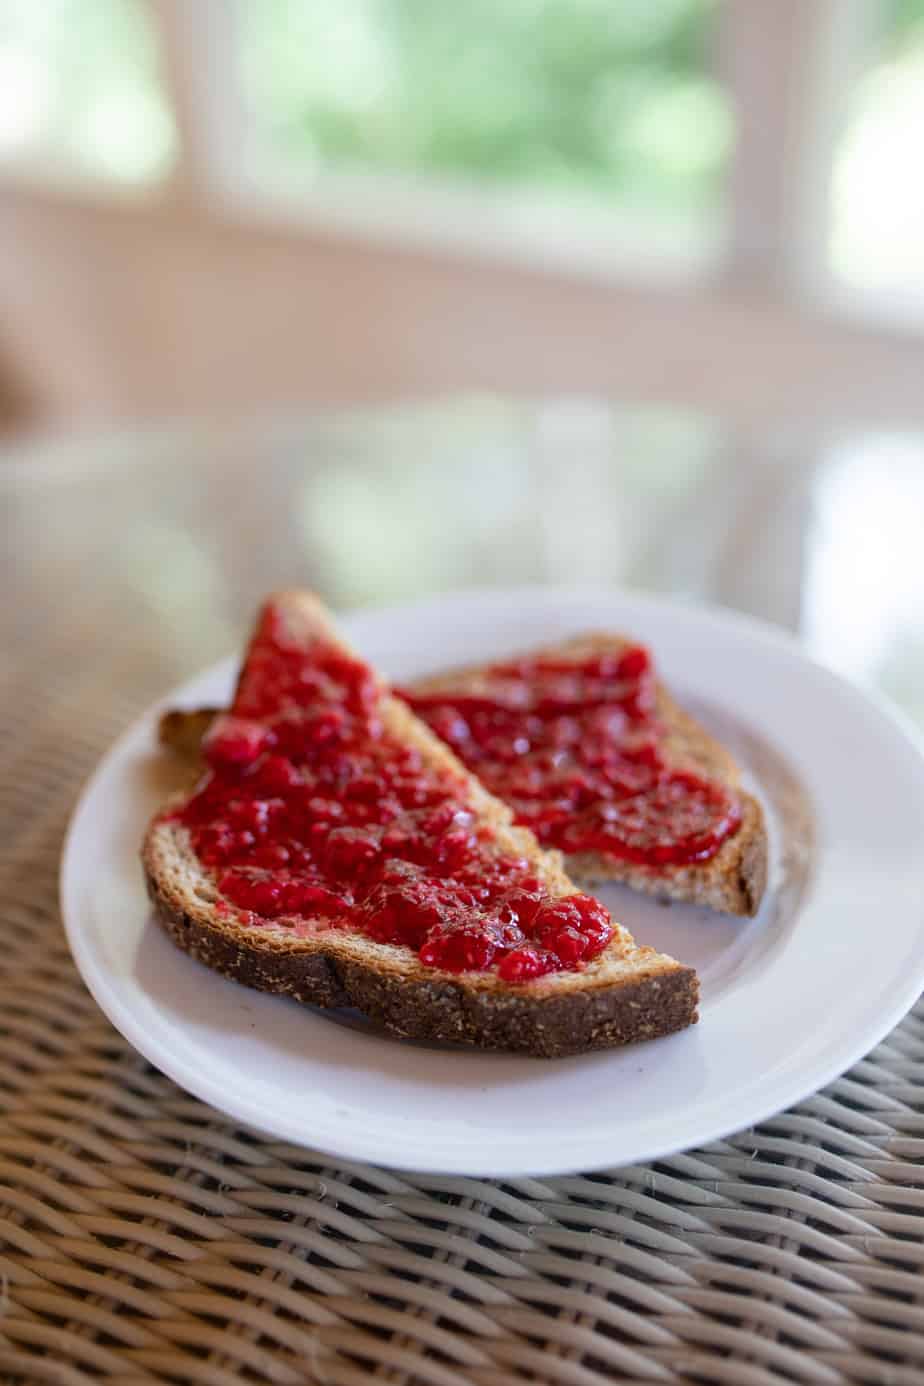 raspberry freezer jam